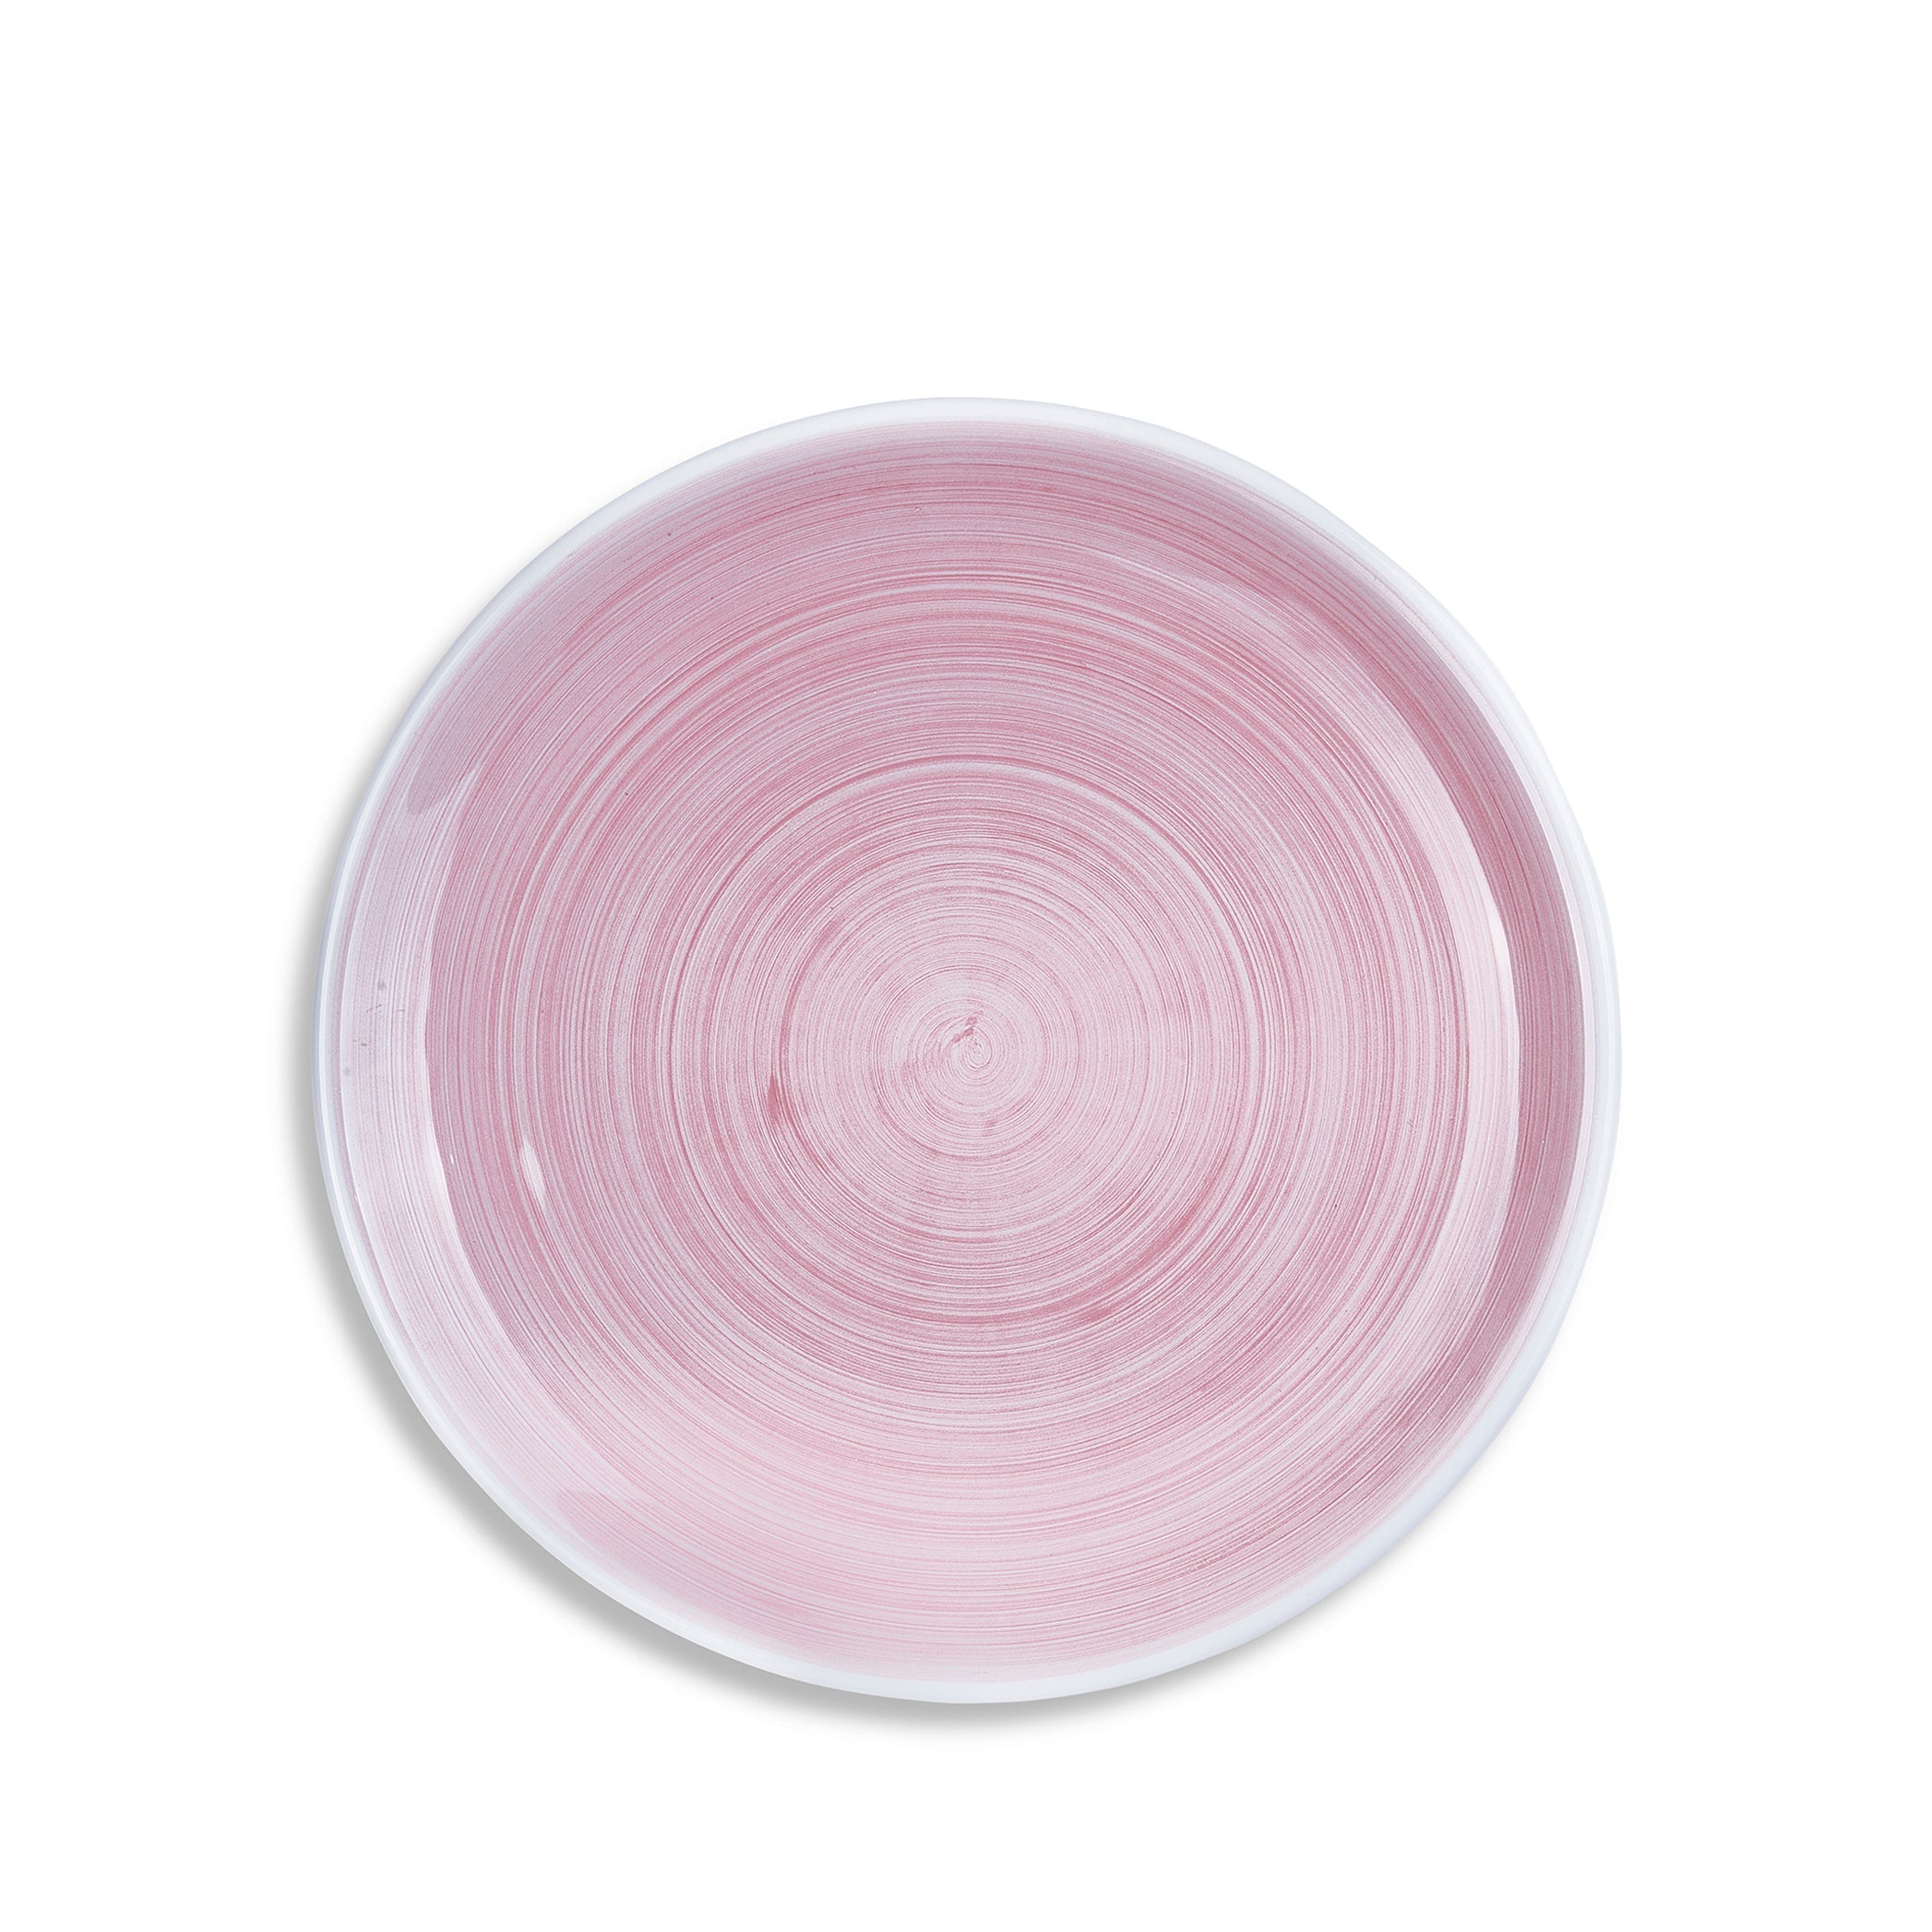 S&B 'Brushed' Ceramic Dinner Plate in Pastel Pink, 30cm